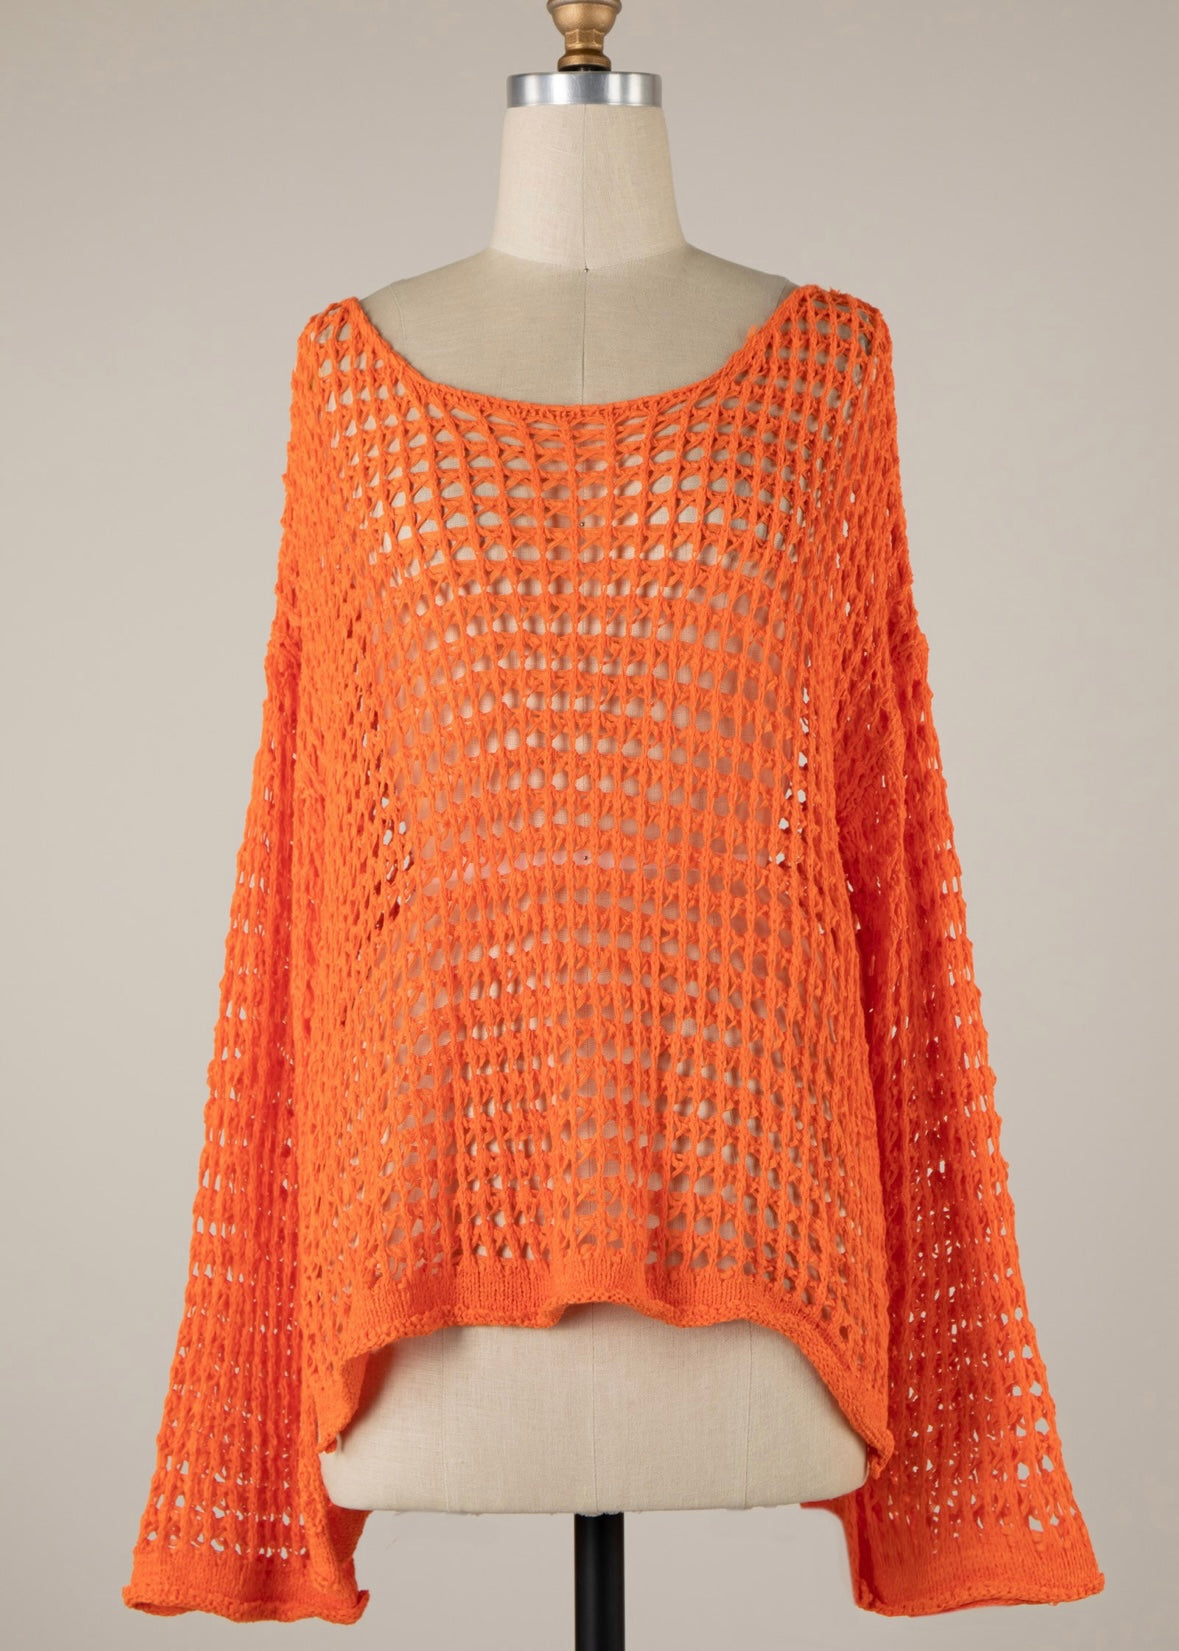 Soft open knit top - orange